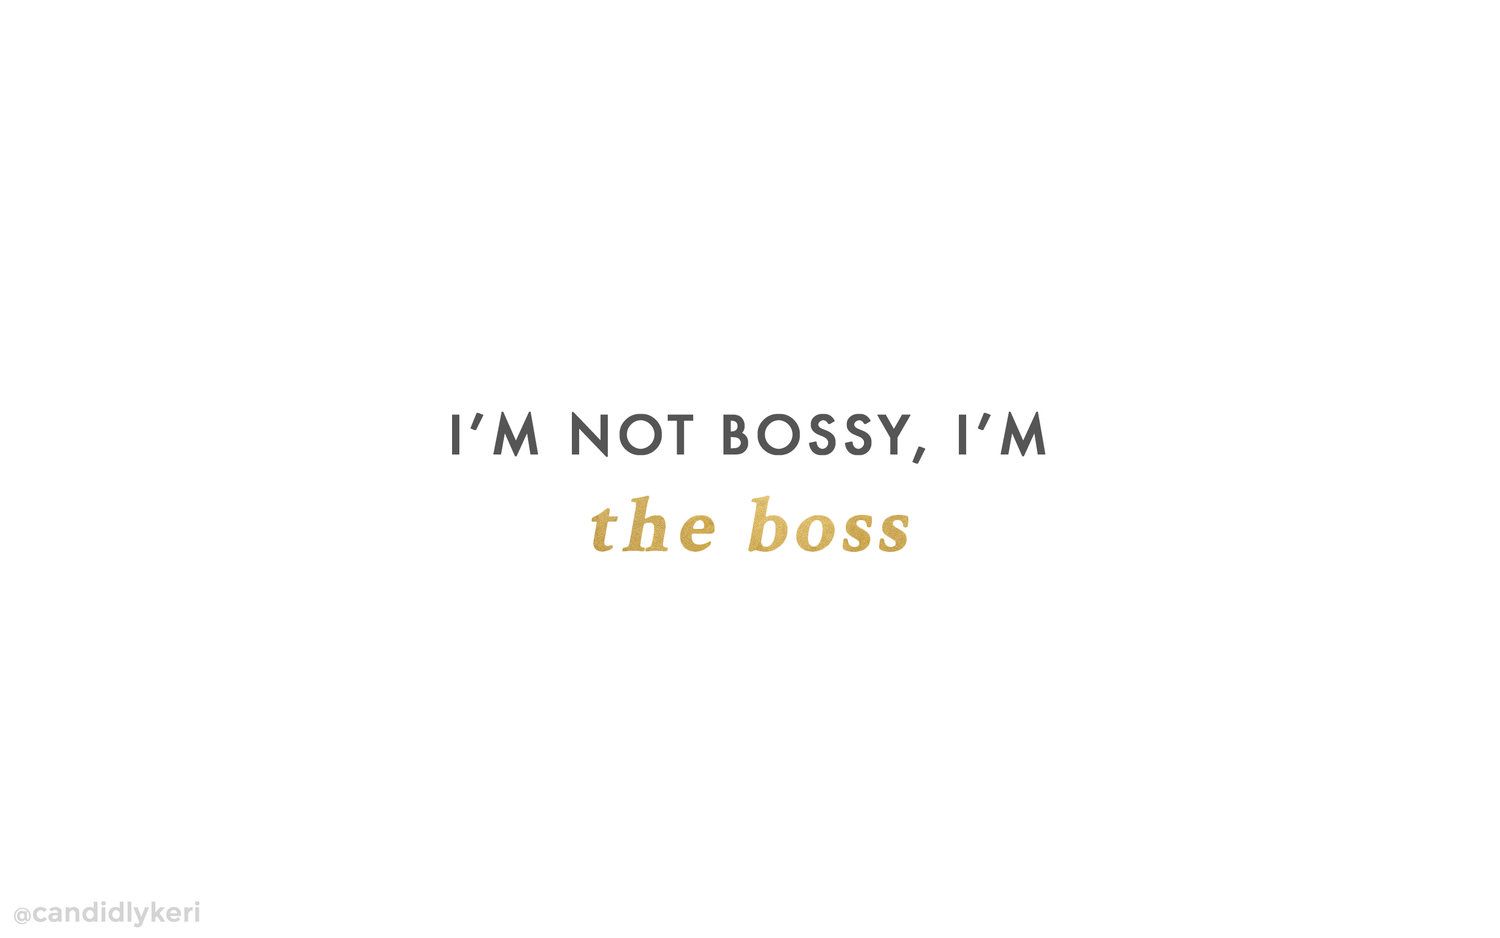 I'm not bossy, I'm the boss. Girl boss wallpaper, Candidly keri, Desktop wallpaper